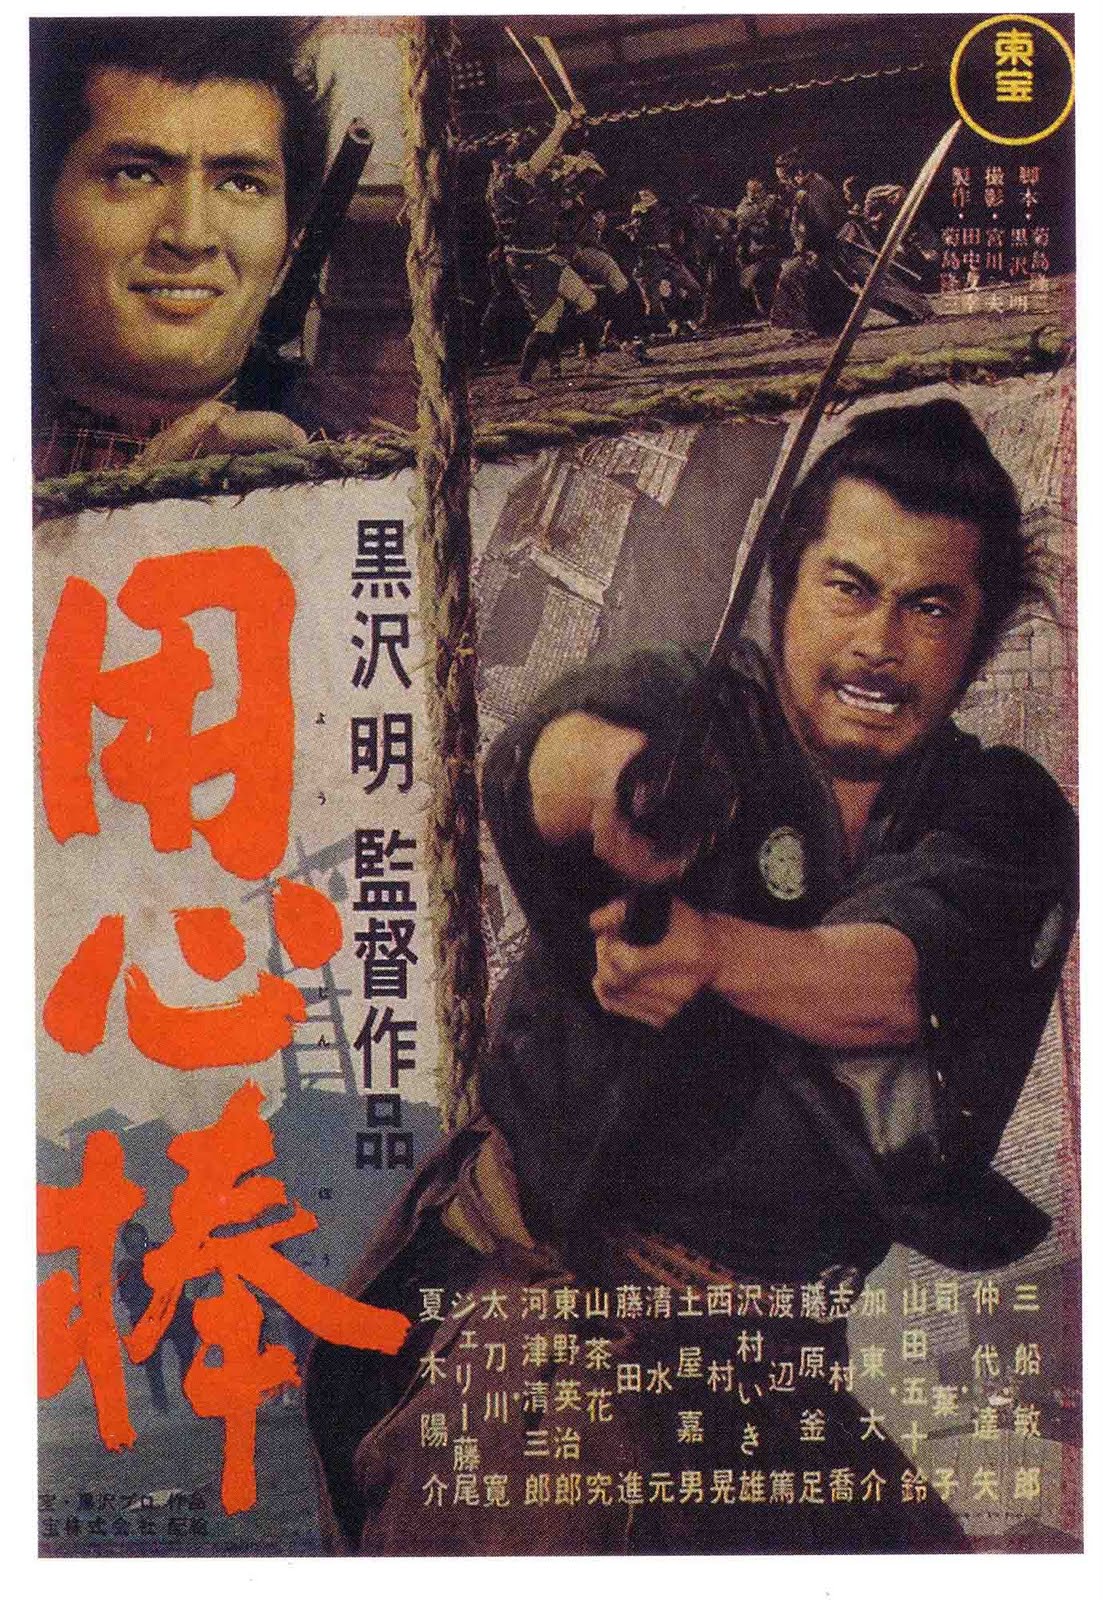 Online Watch Mifune: The Last Samurai Movie Online